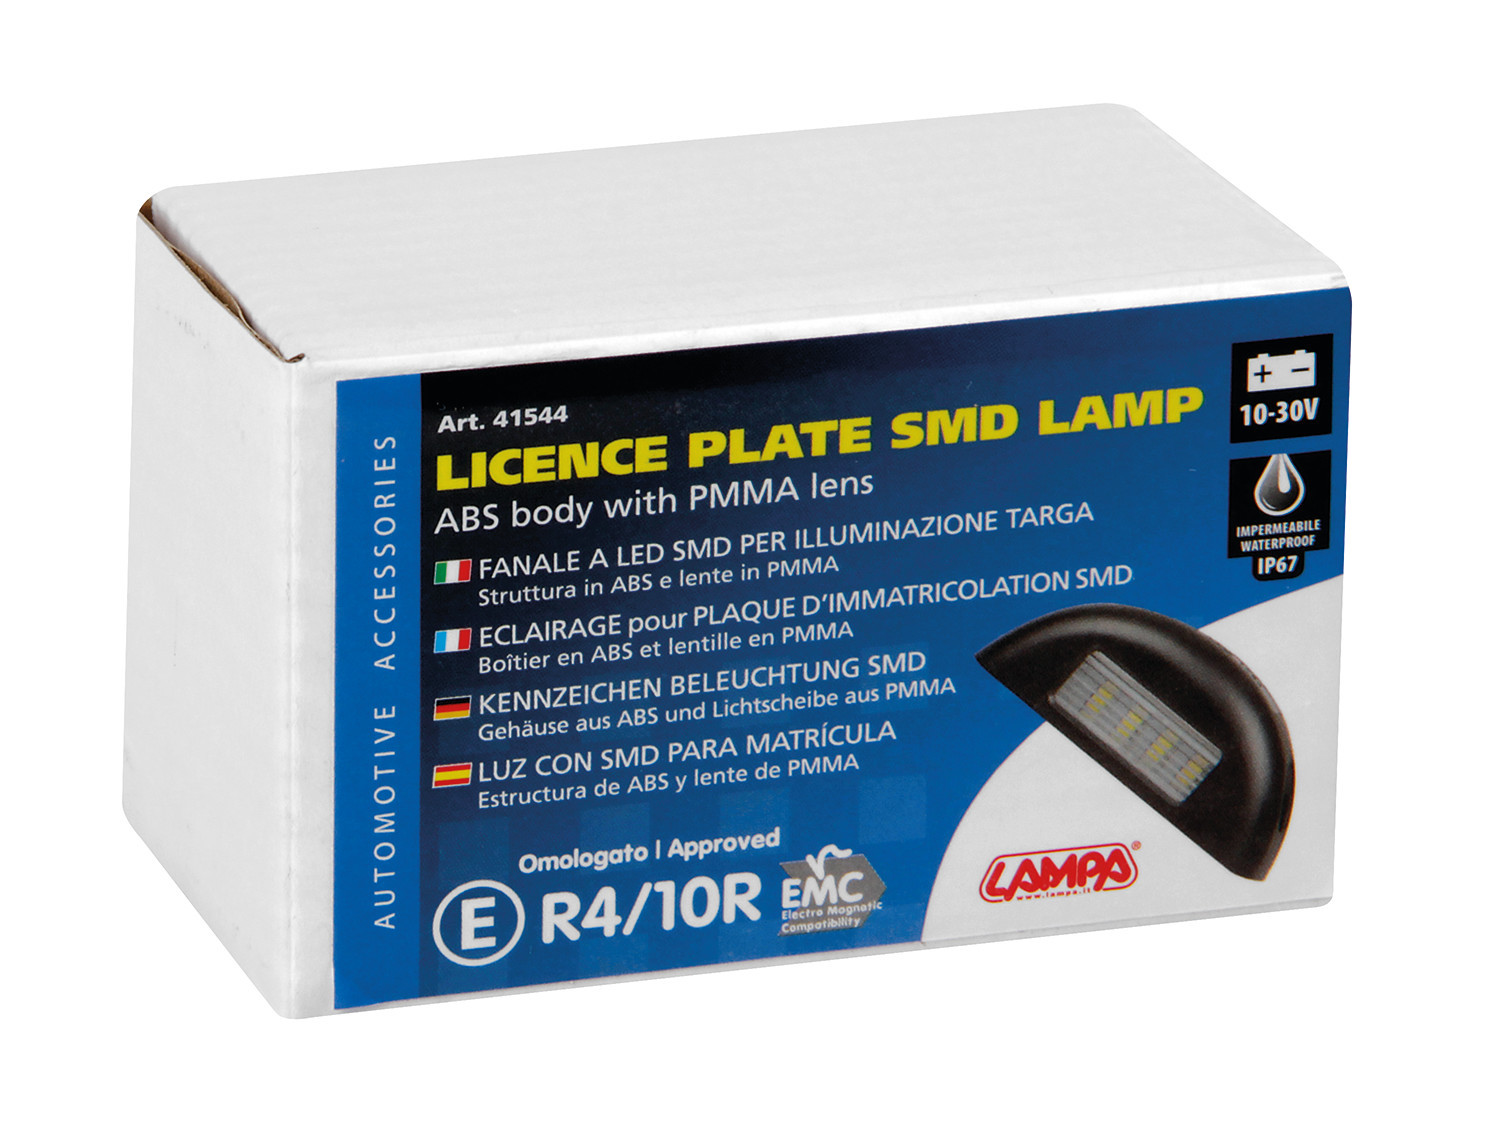 Licence plate Smd lamp, 10/30V thumb